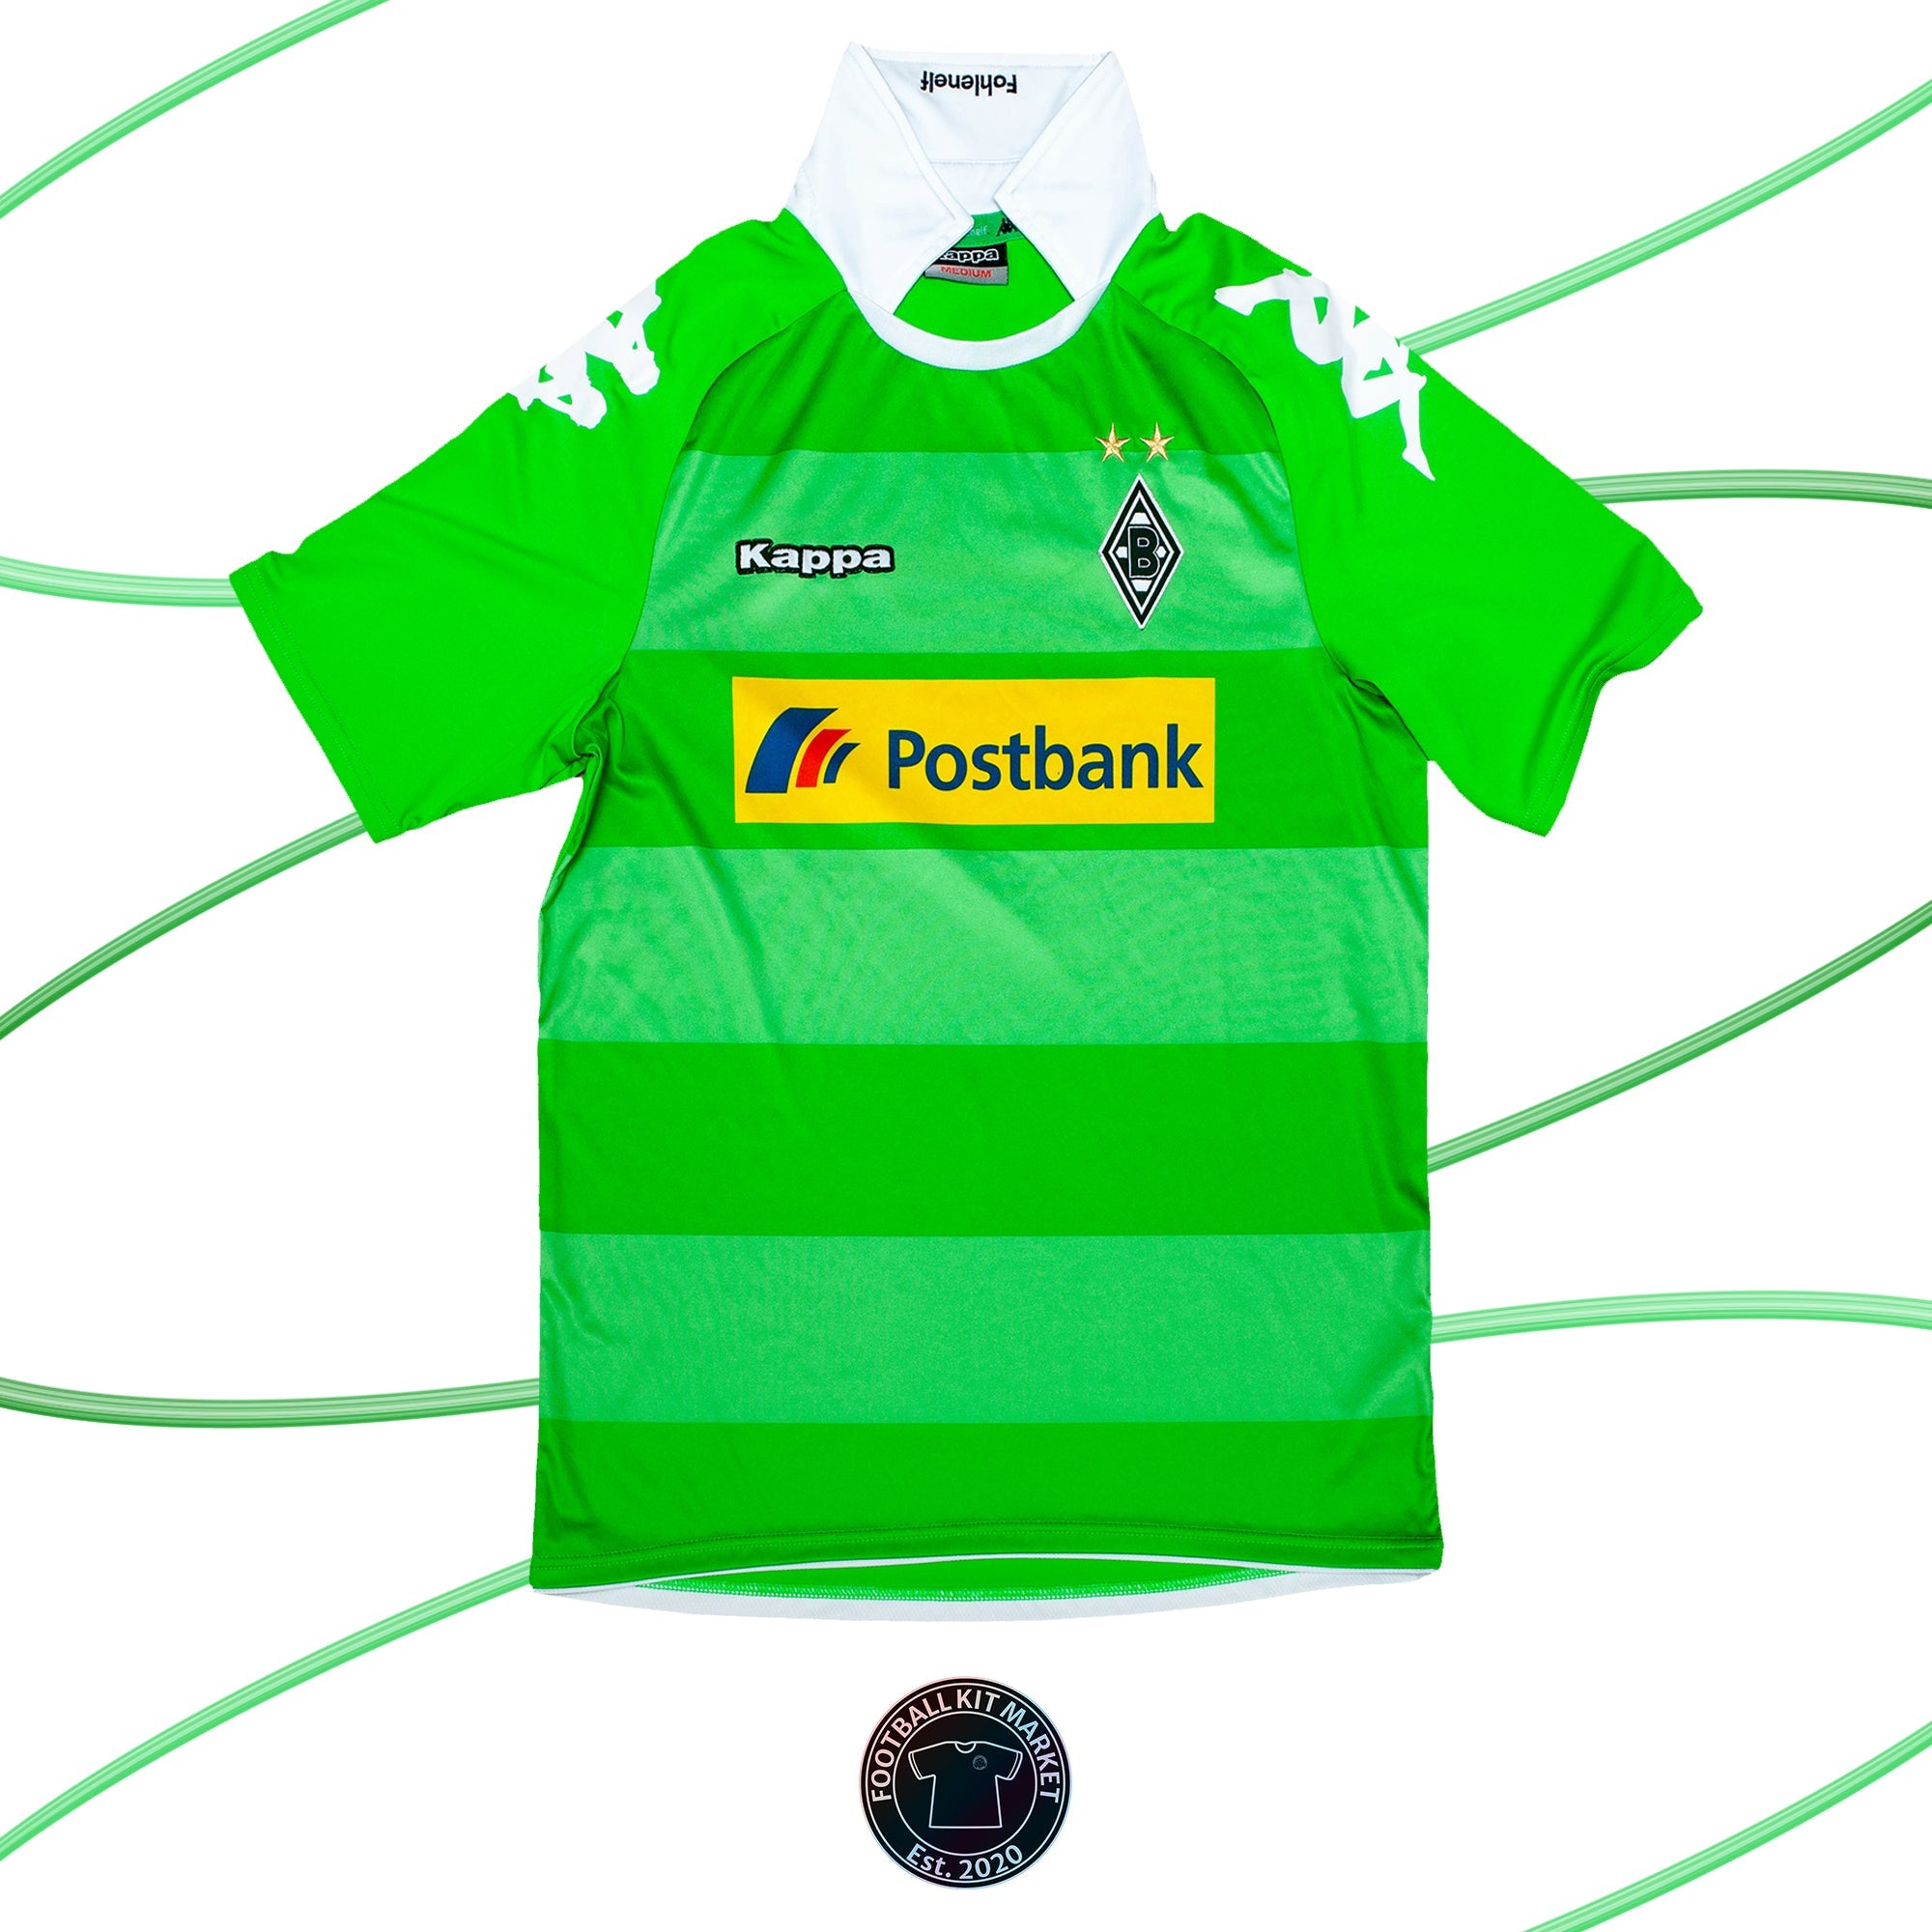 Genuine BORUSSIA MONCHENGLADBACH Away Shirt (2013-2014) - KAPPA (M) - Product Image from Football Kit Market